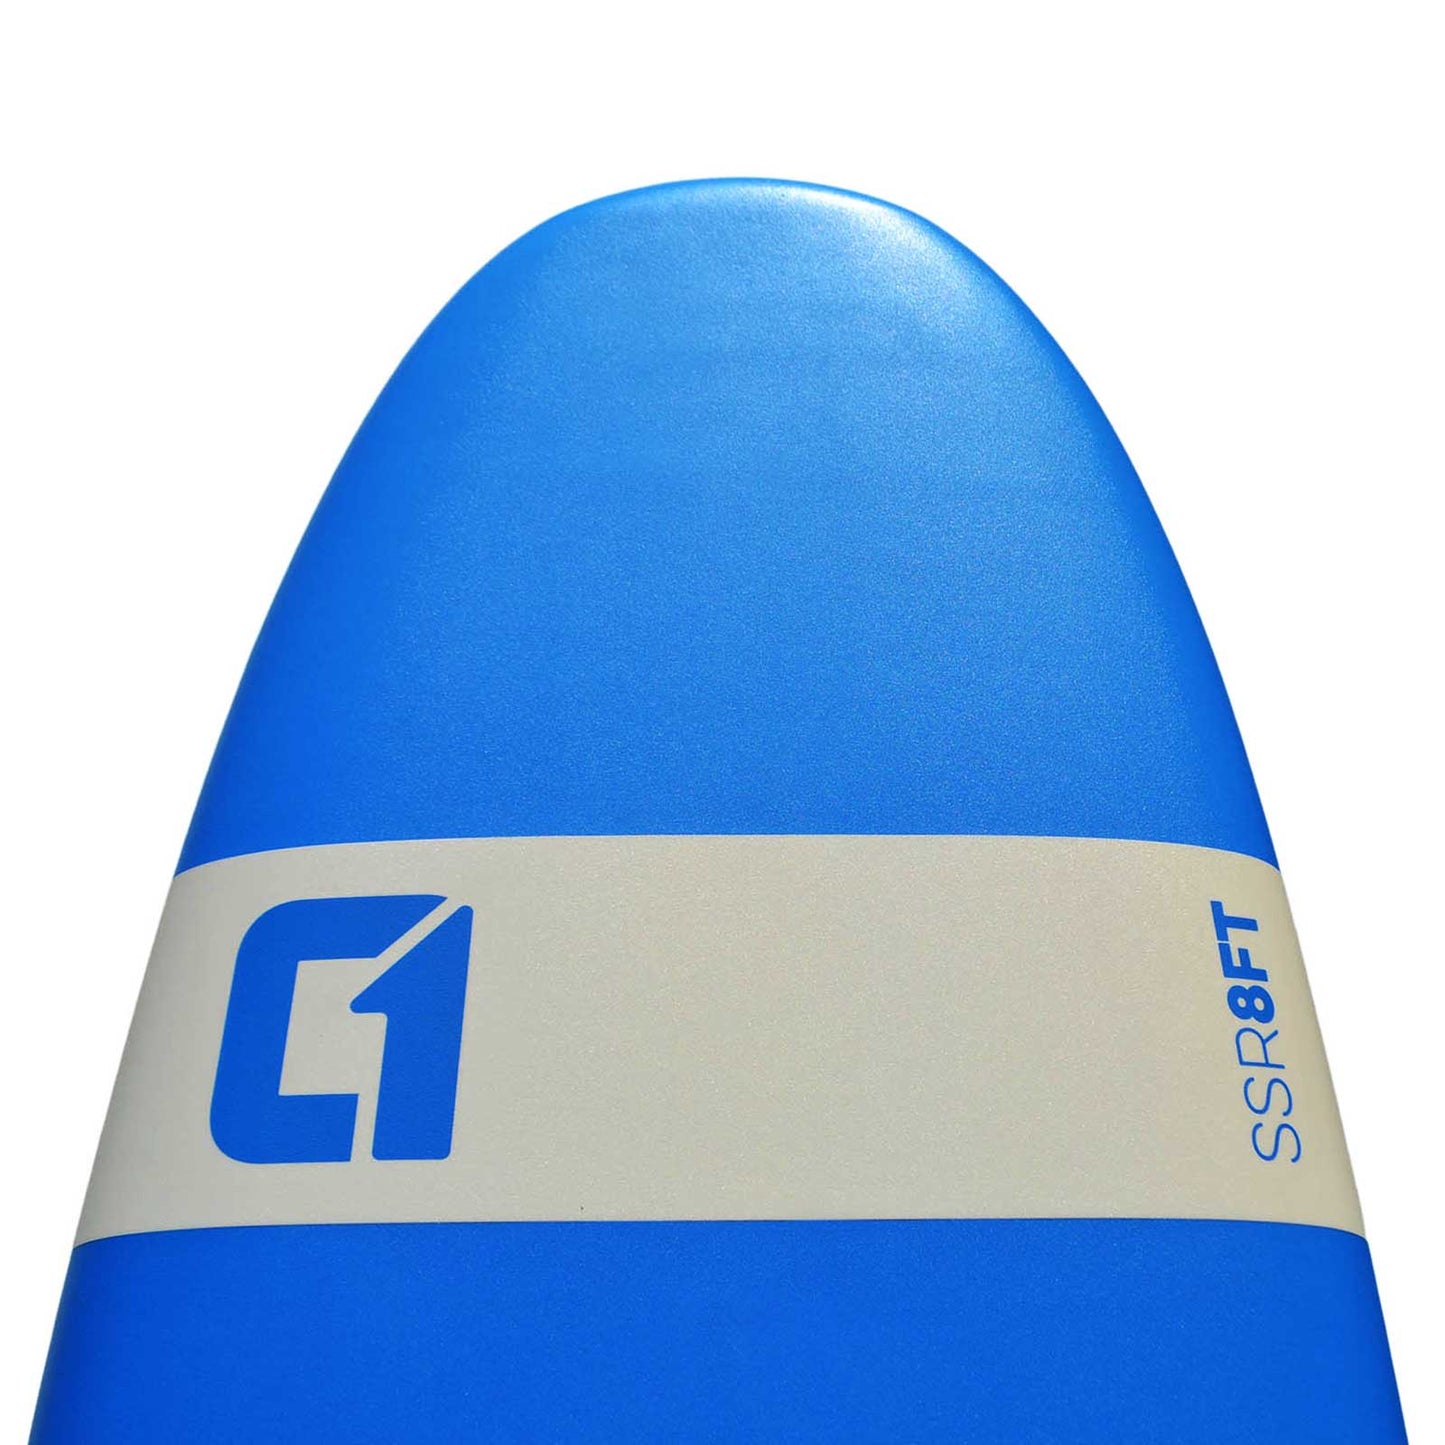 9′ x 23.5″ SSR Beginner Softboard Surfboard